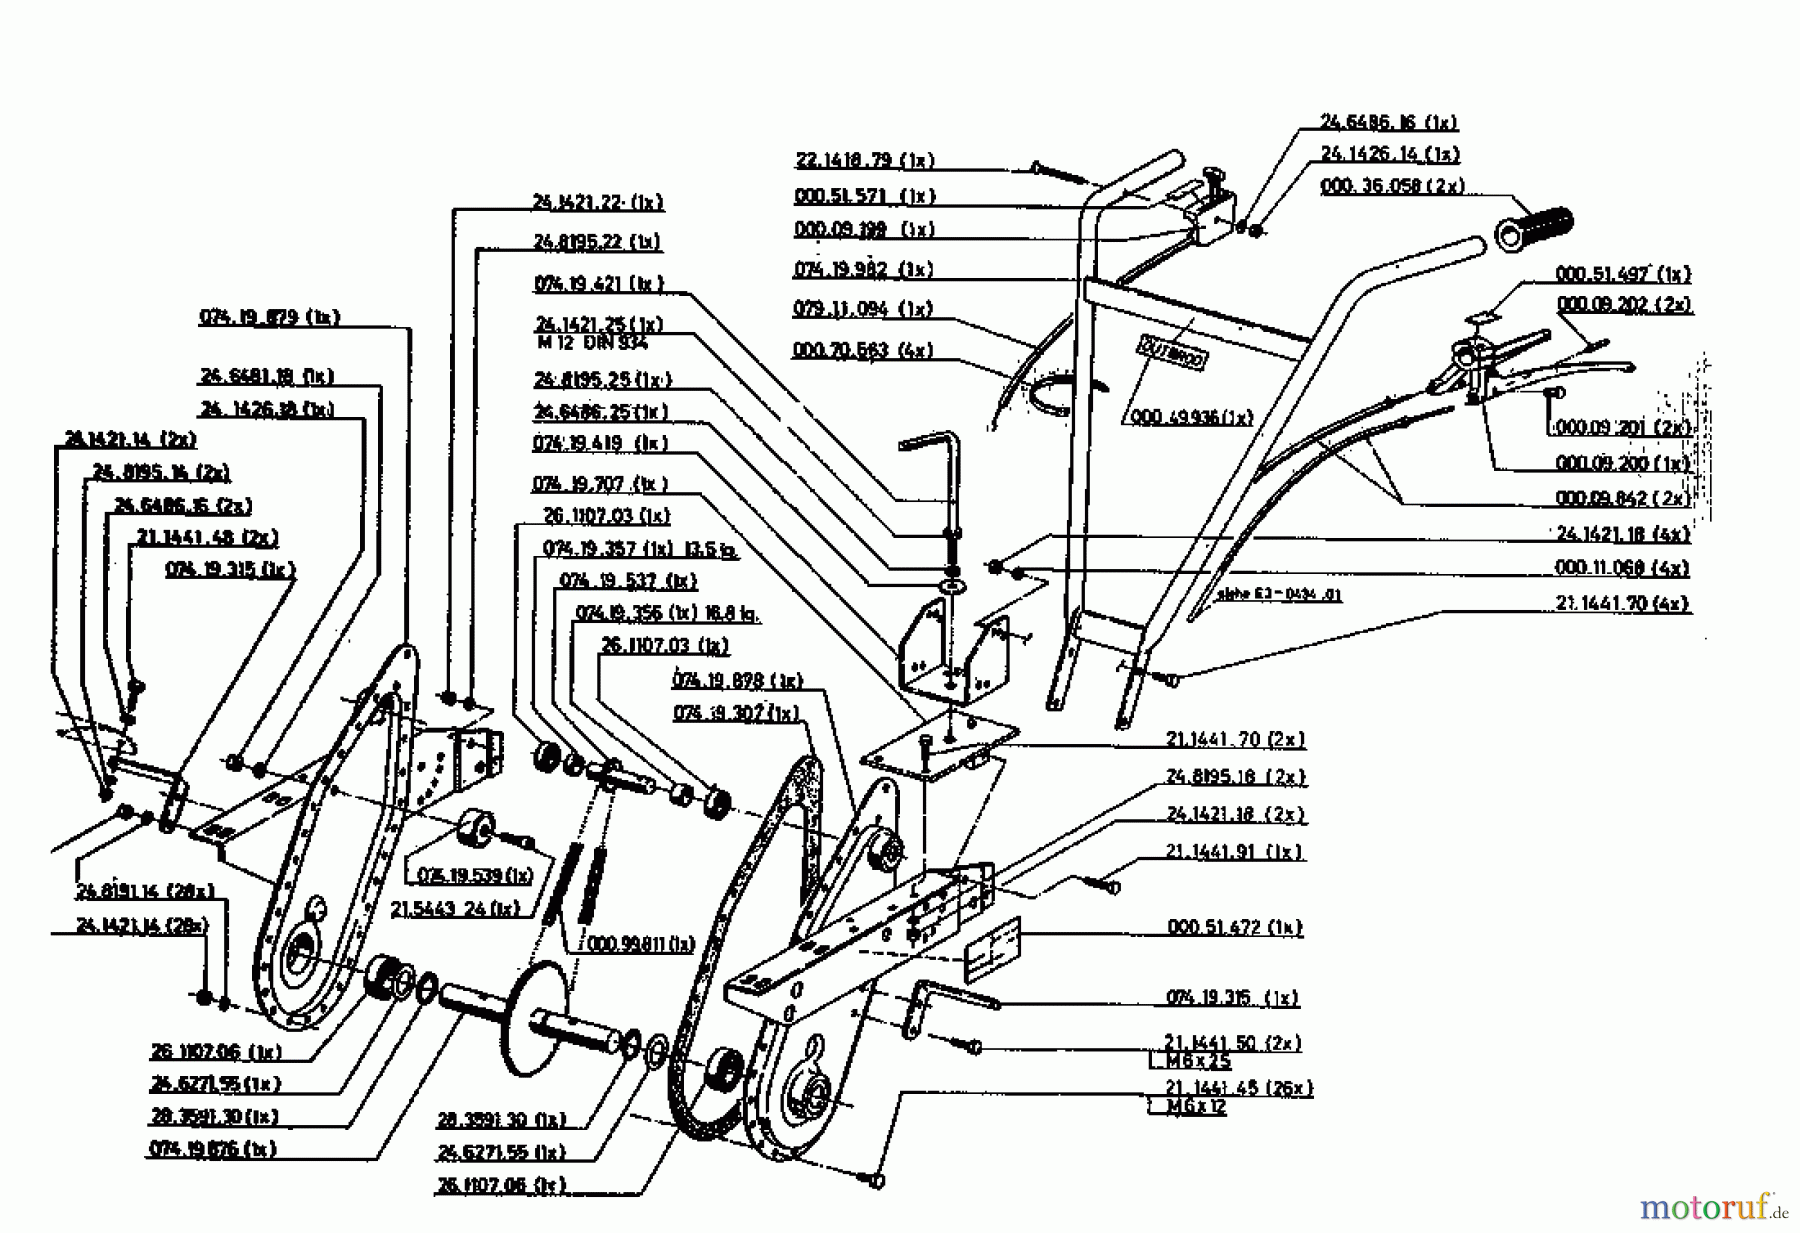  Gutbrod Motobineuse MB 62-52 K 07518.03  (1996) Machine de base